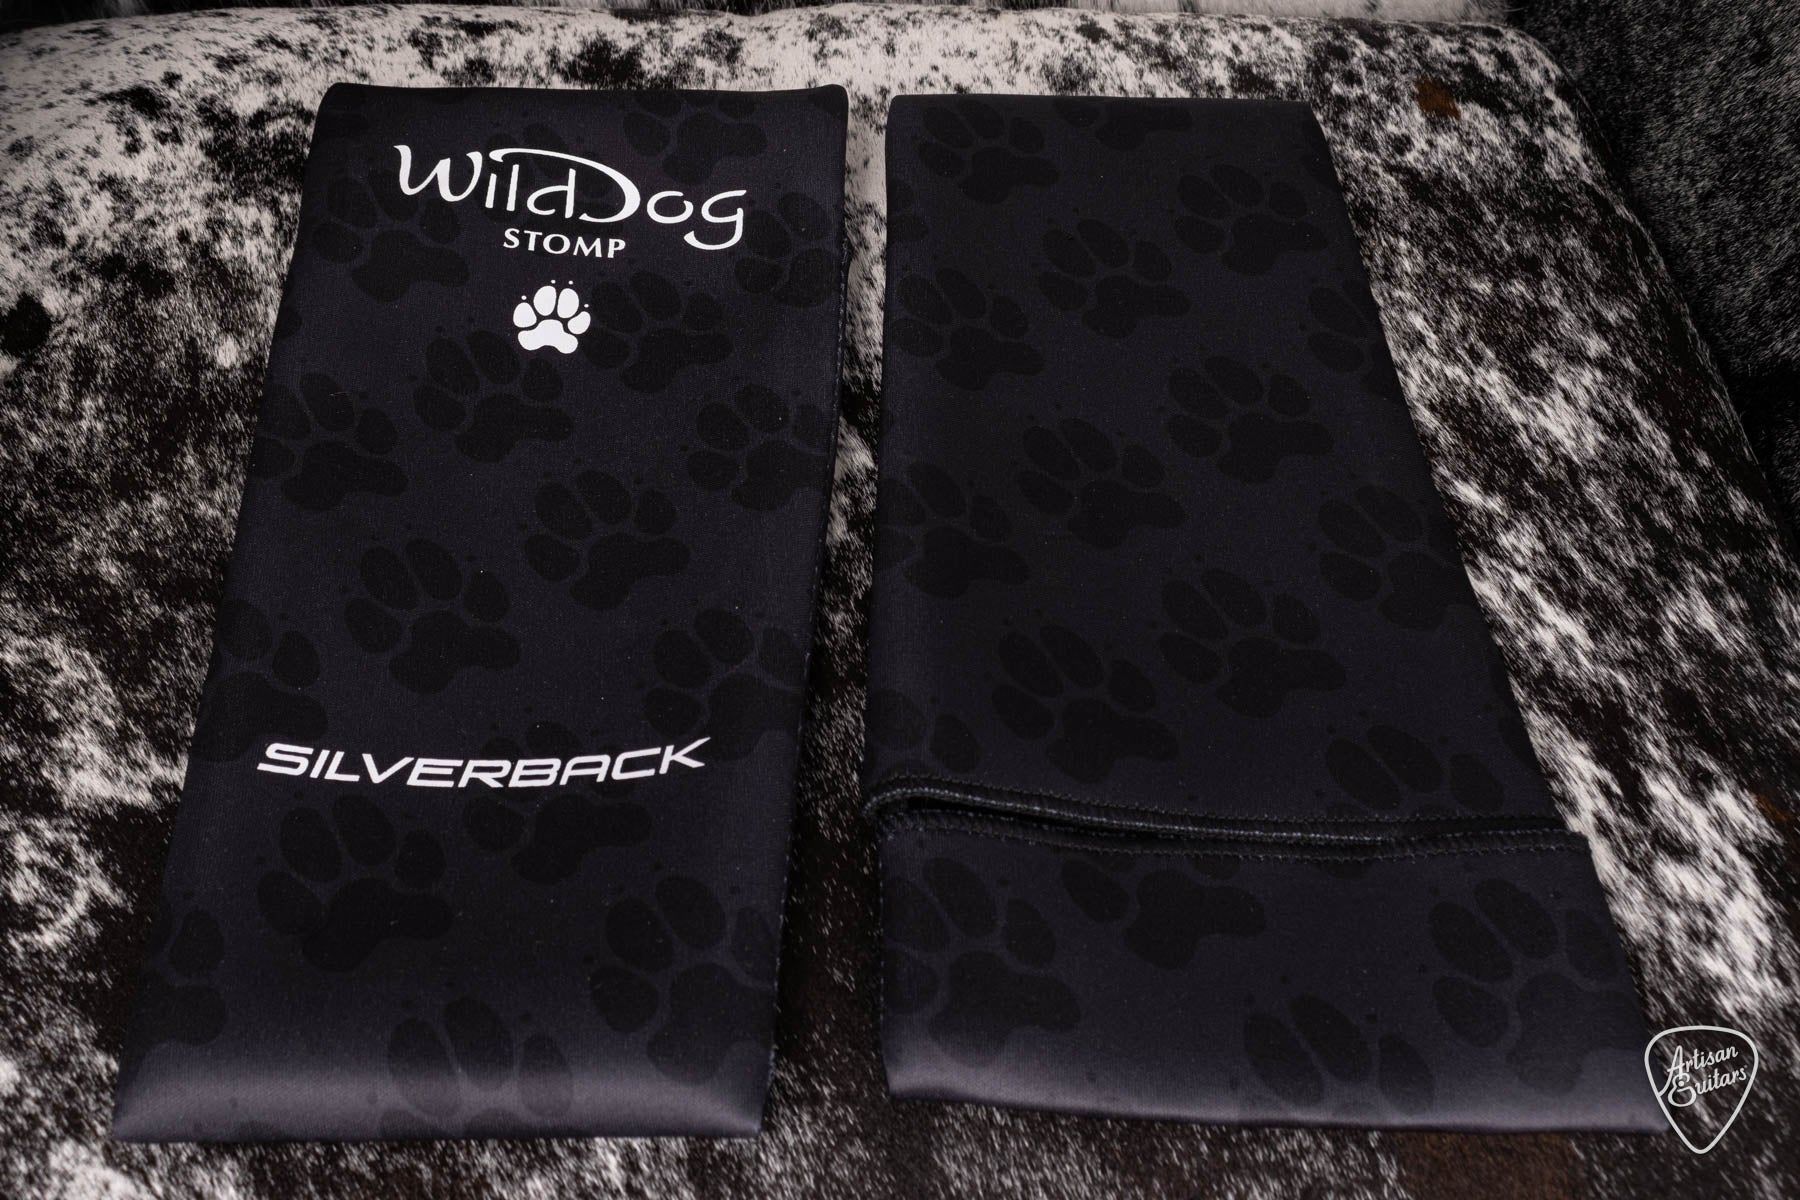 Wild Dog Silverback Stomp Box with Jingles - 16672